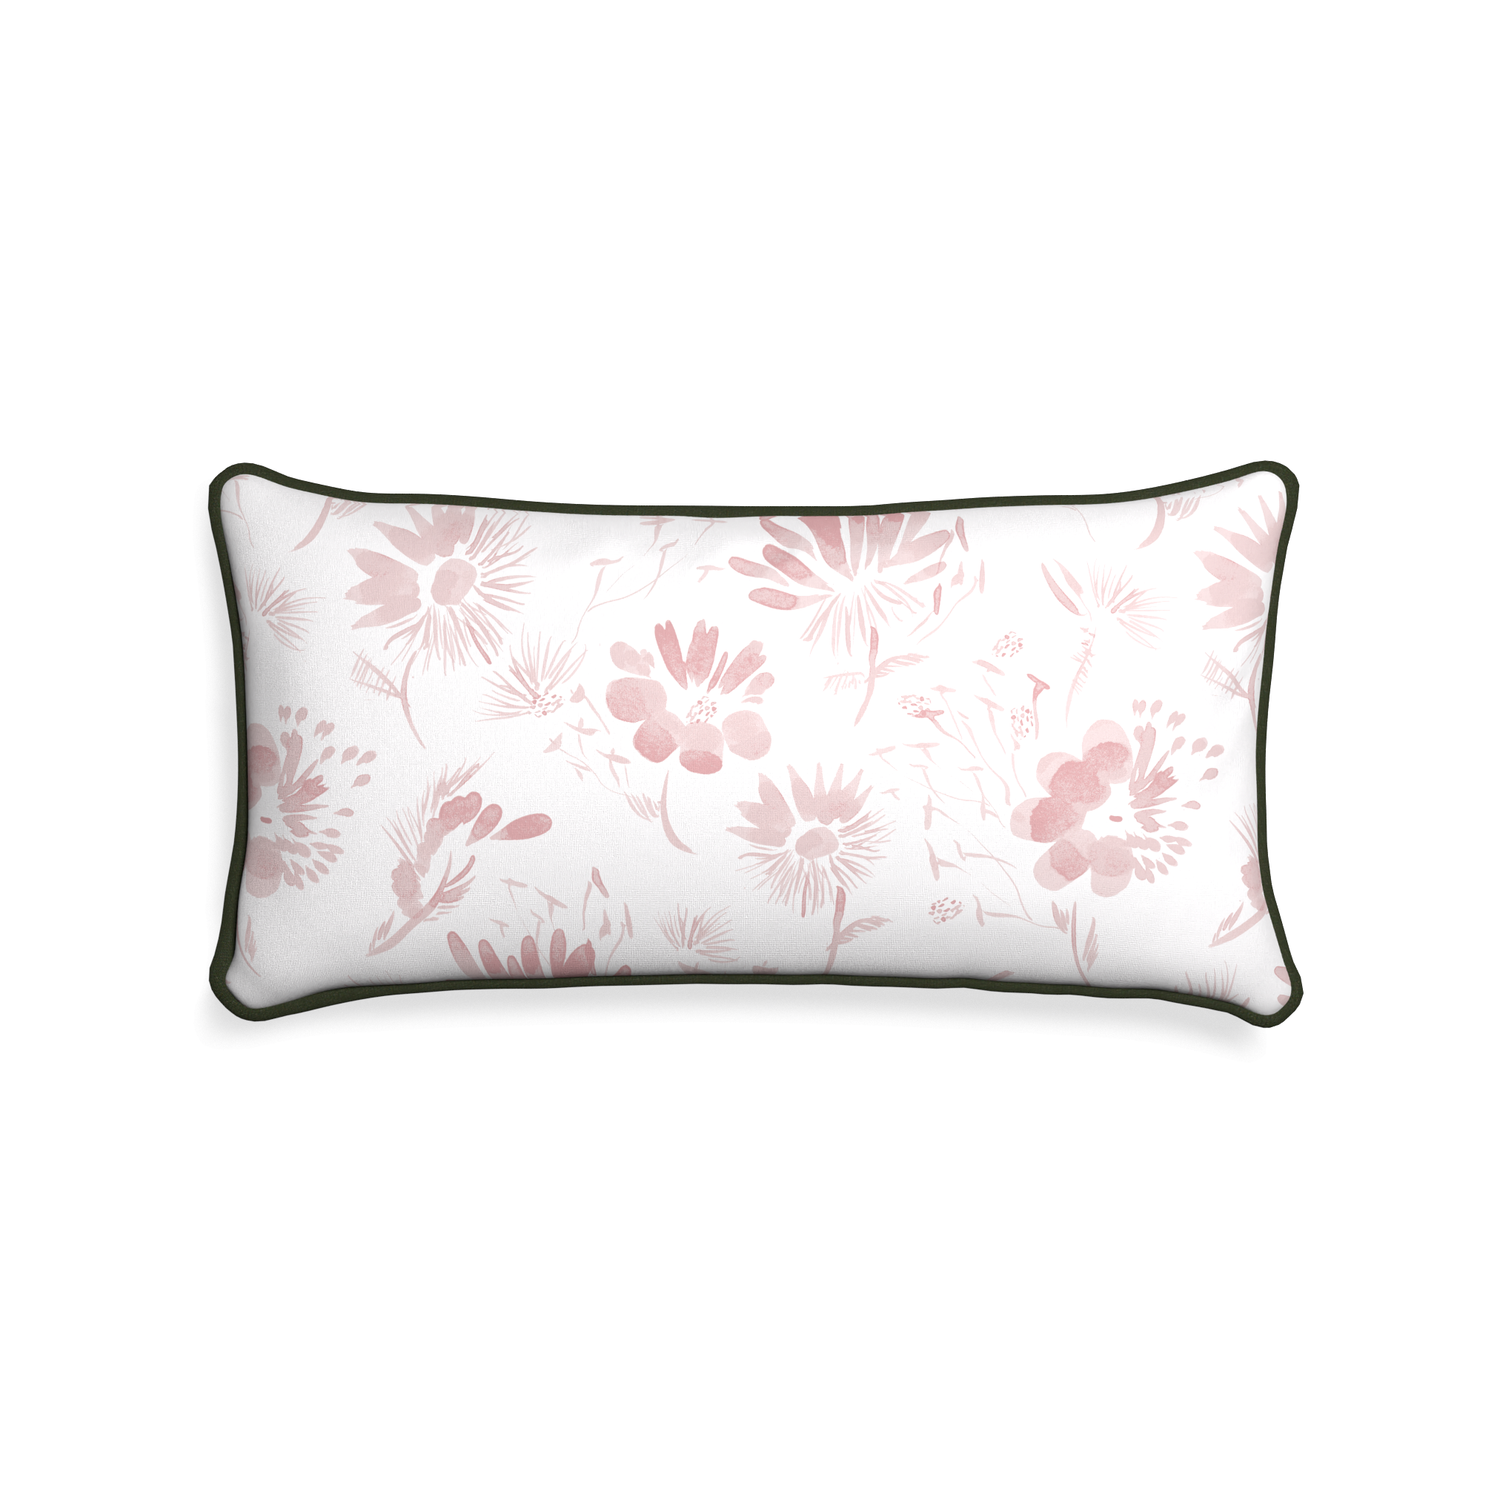 Midi-lumbar blake custom pink floralpillow with f piping on white background